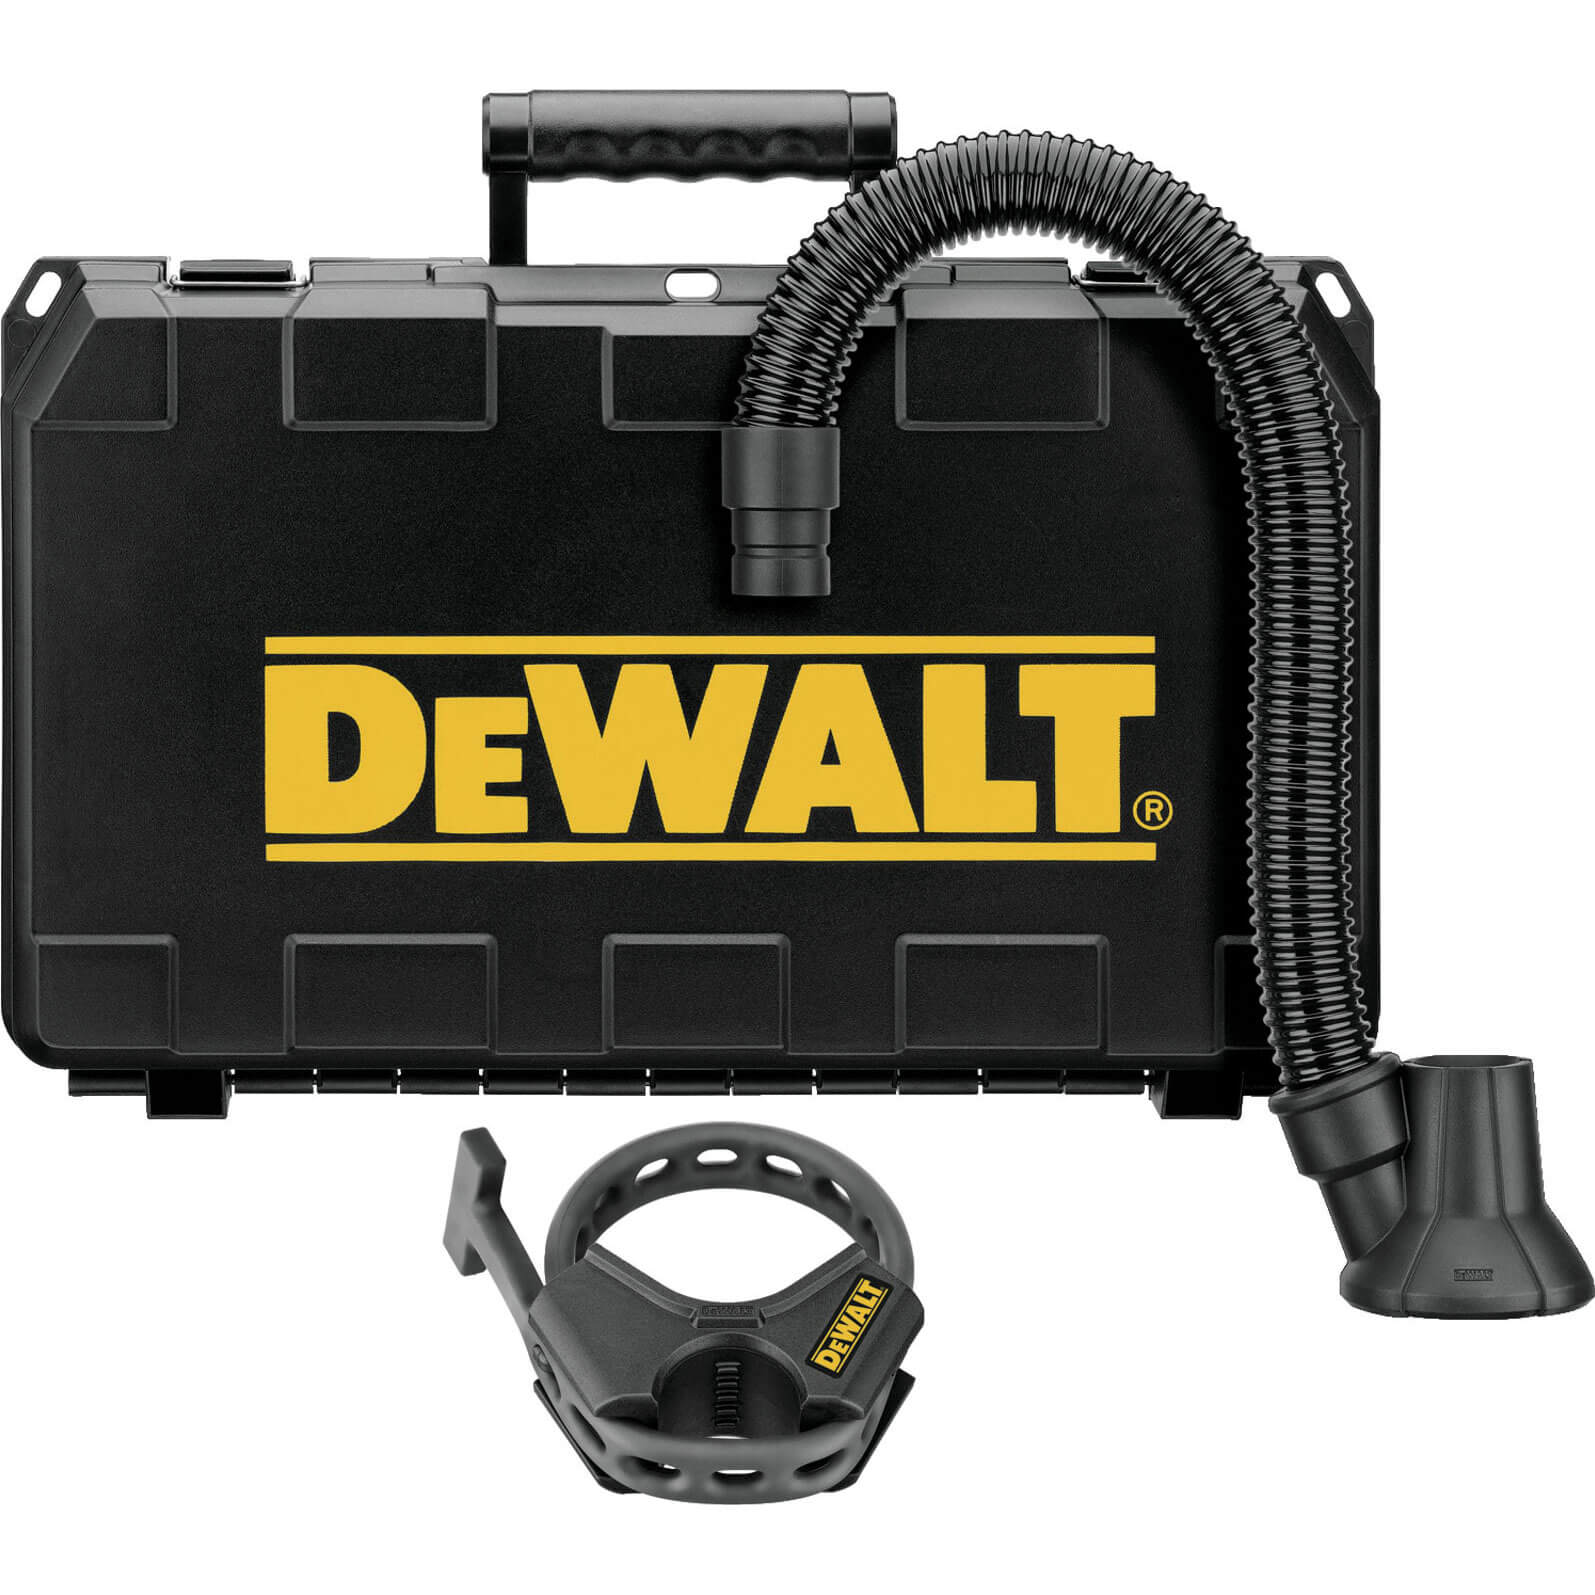 Image of DeWalt DWH052 Demolition Hammer Dust Extraction